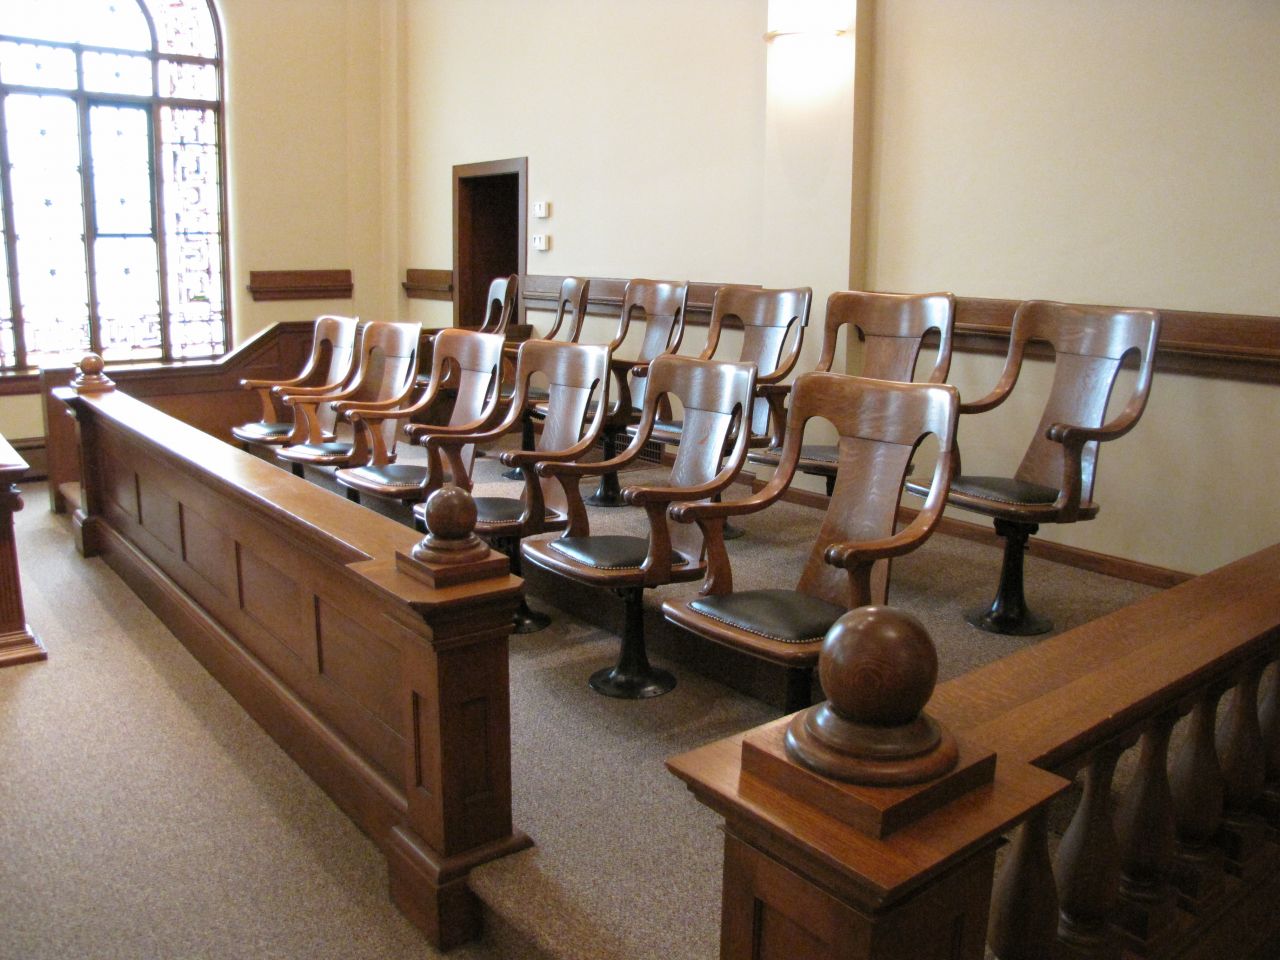 Historic Courtroom jury box